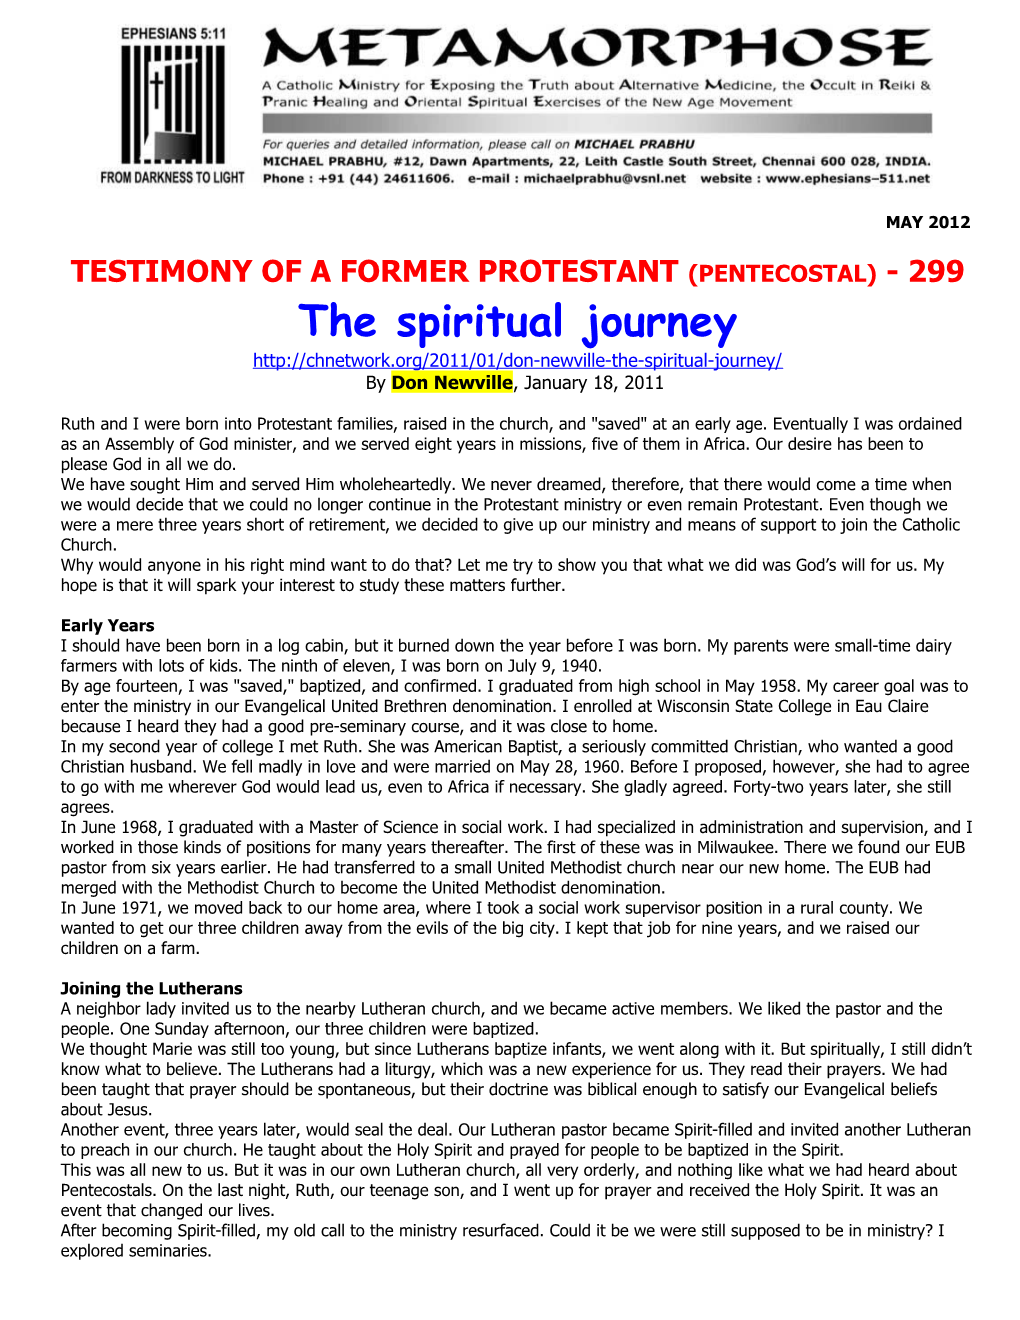 Testimony of a Former Protestant (Pentecostal) - 299